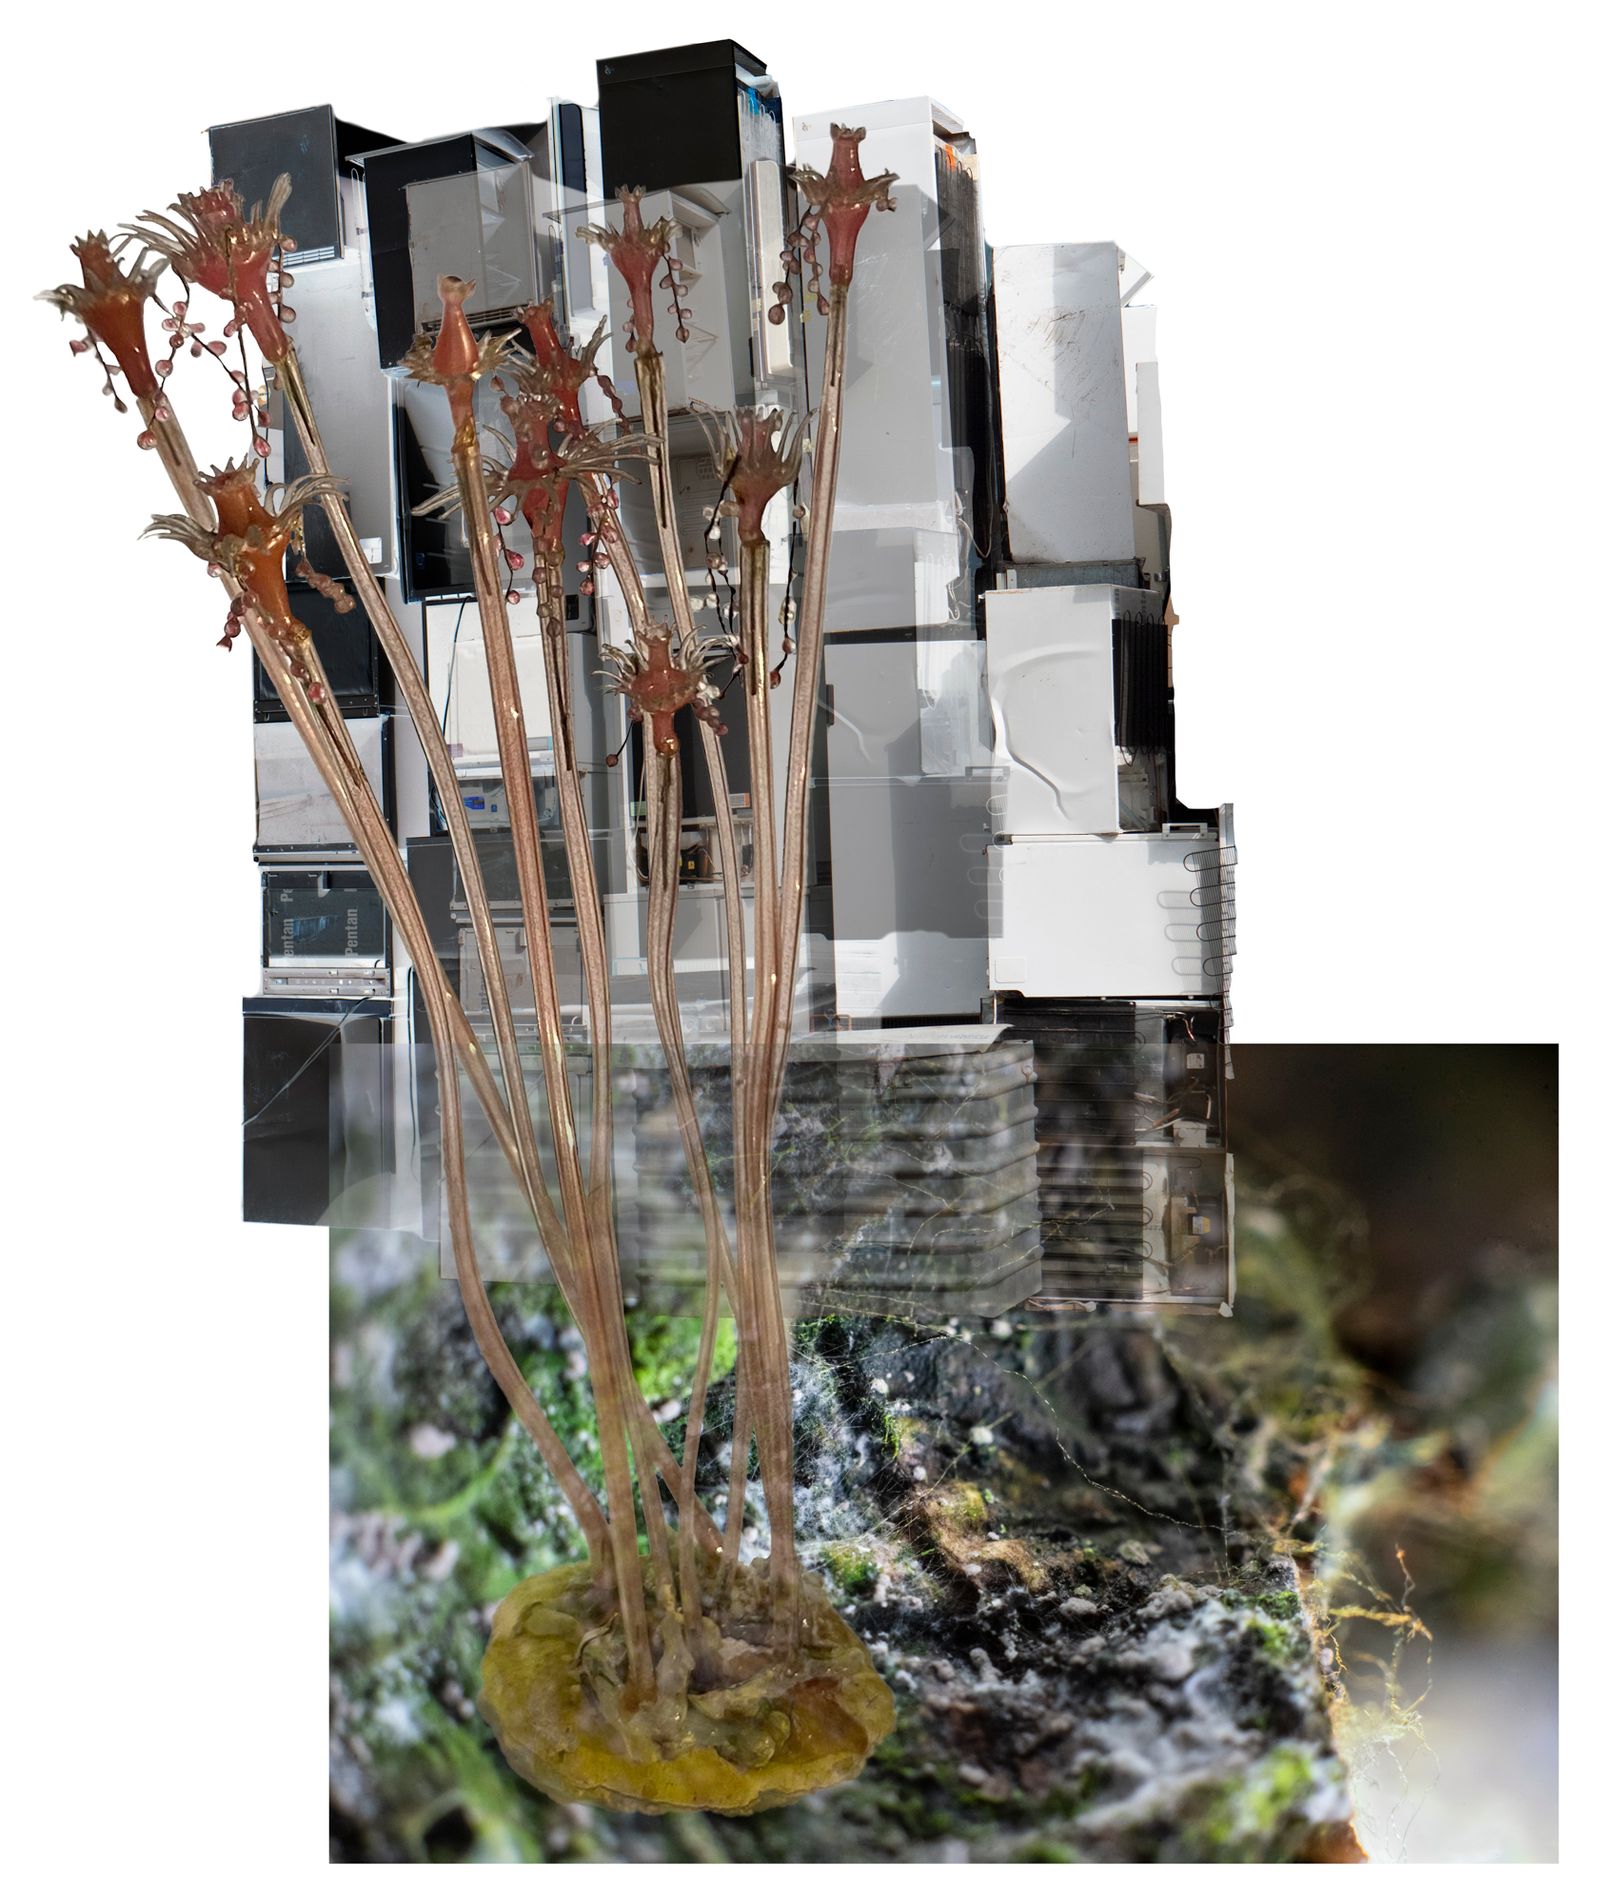 © Florence Iff - earth/moss/mold, disposed refrigerators, glass models of marine invertebrates